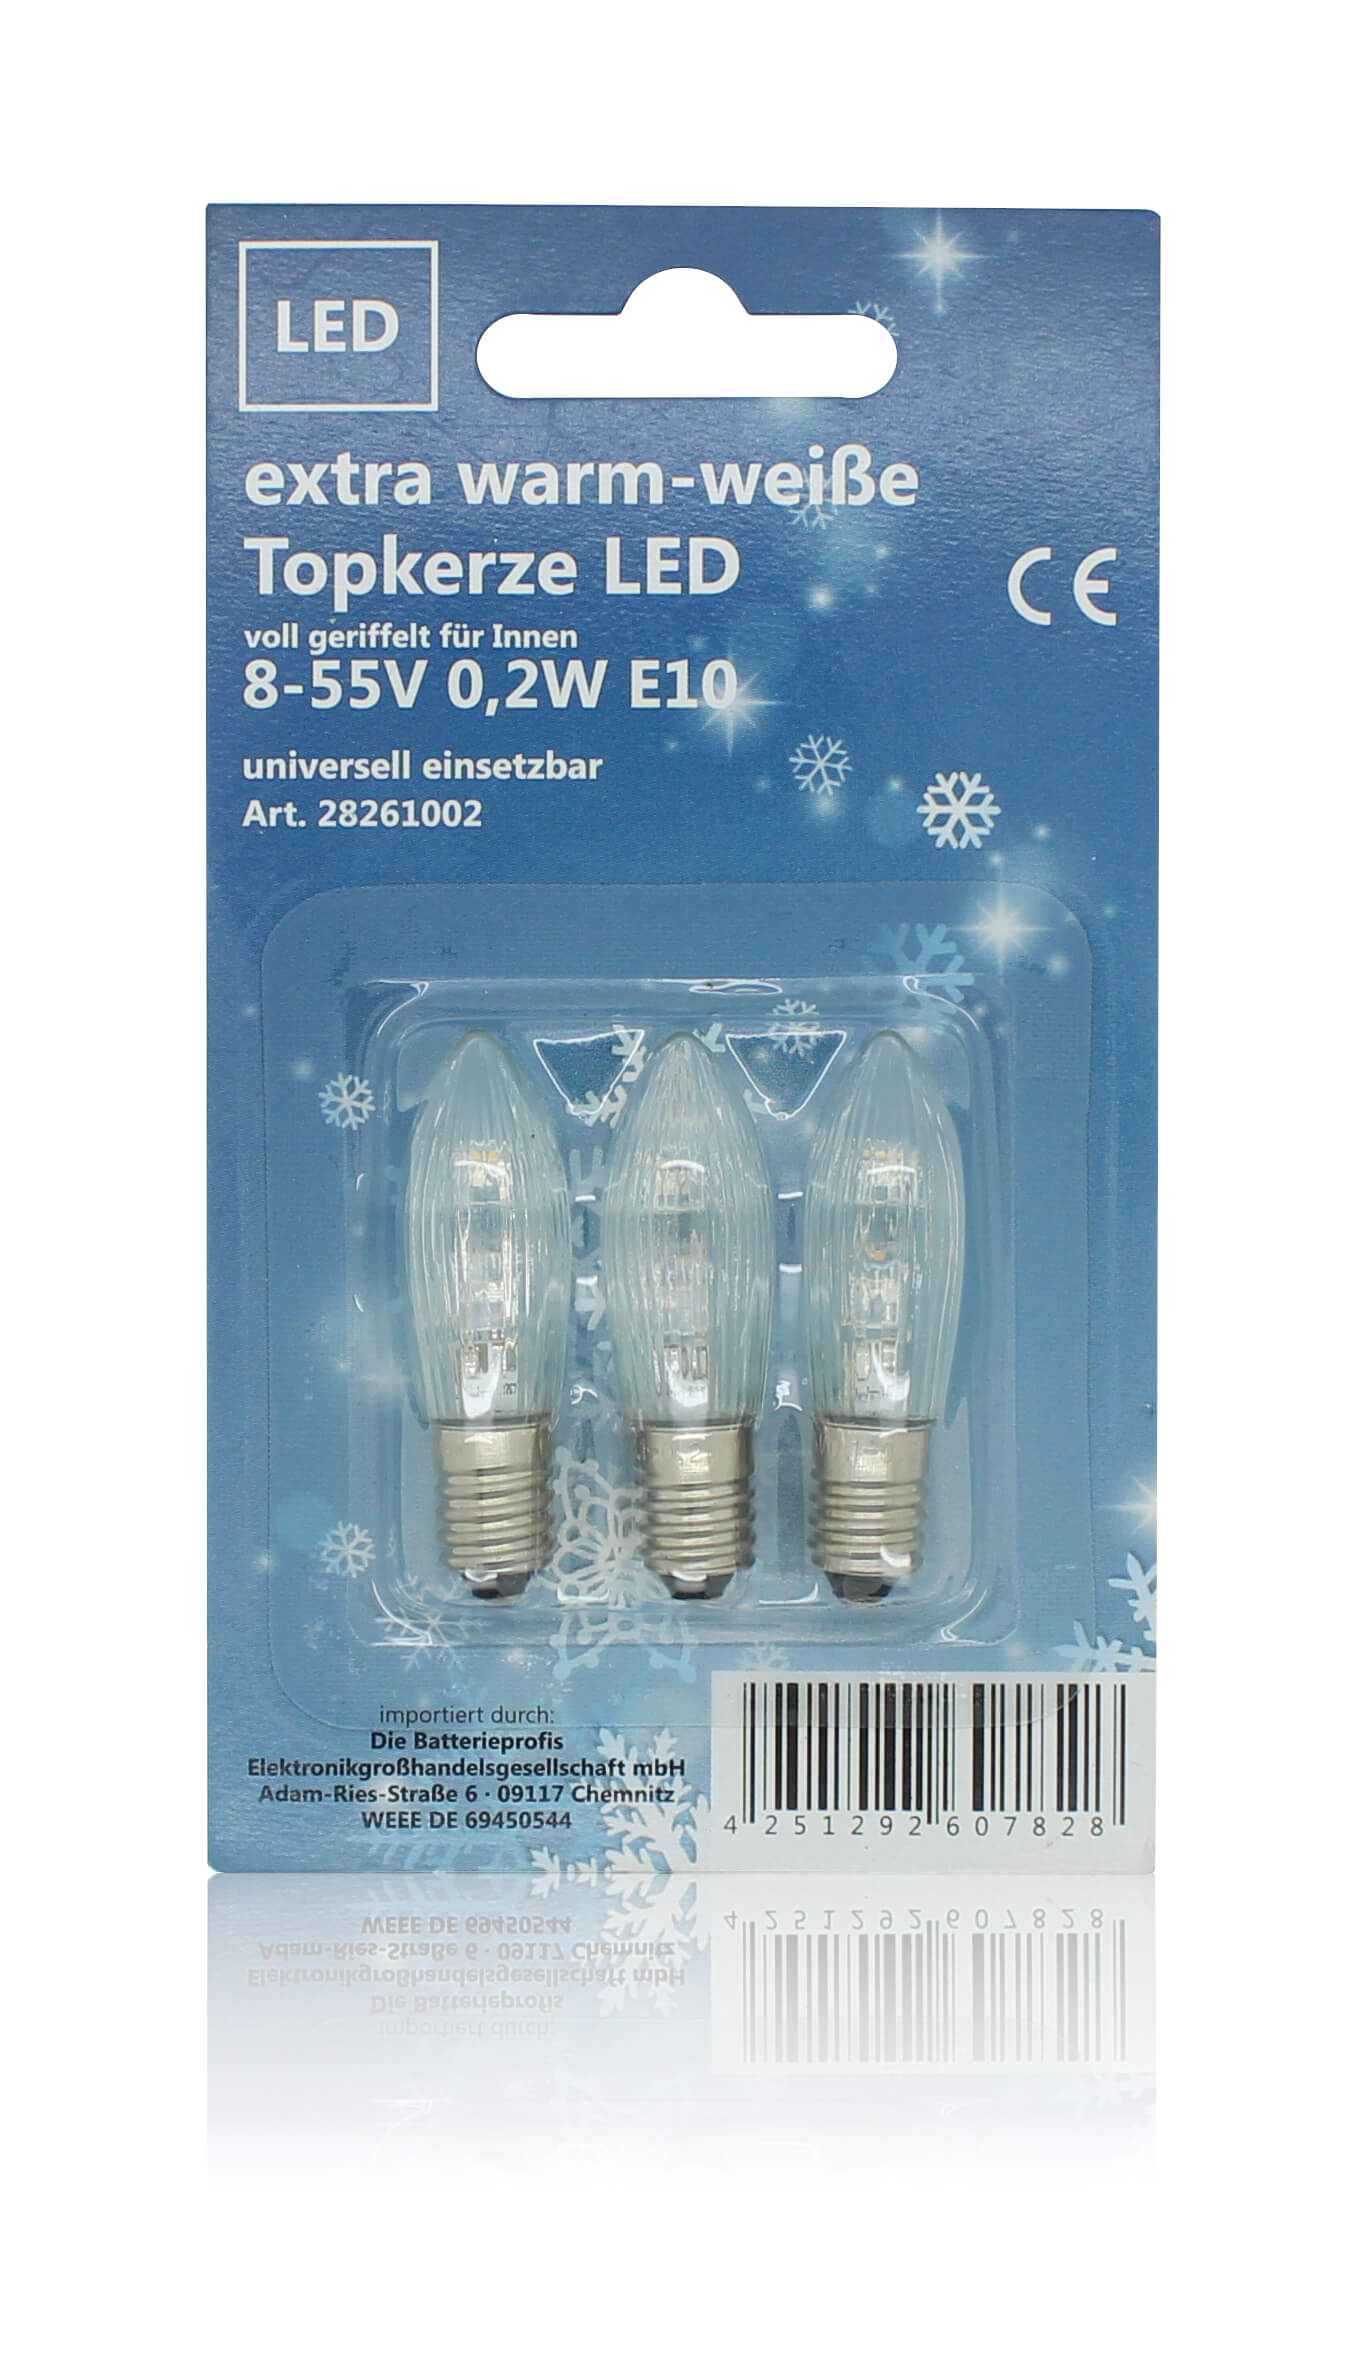 LED Topkerzen extra warmweiss 8-55V 0,2W E10